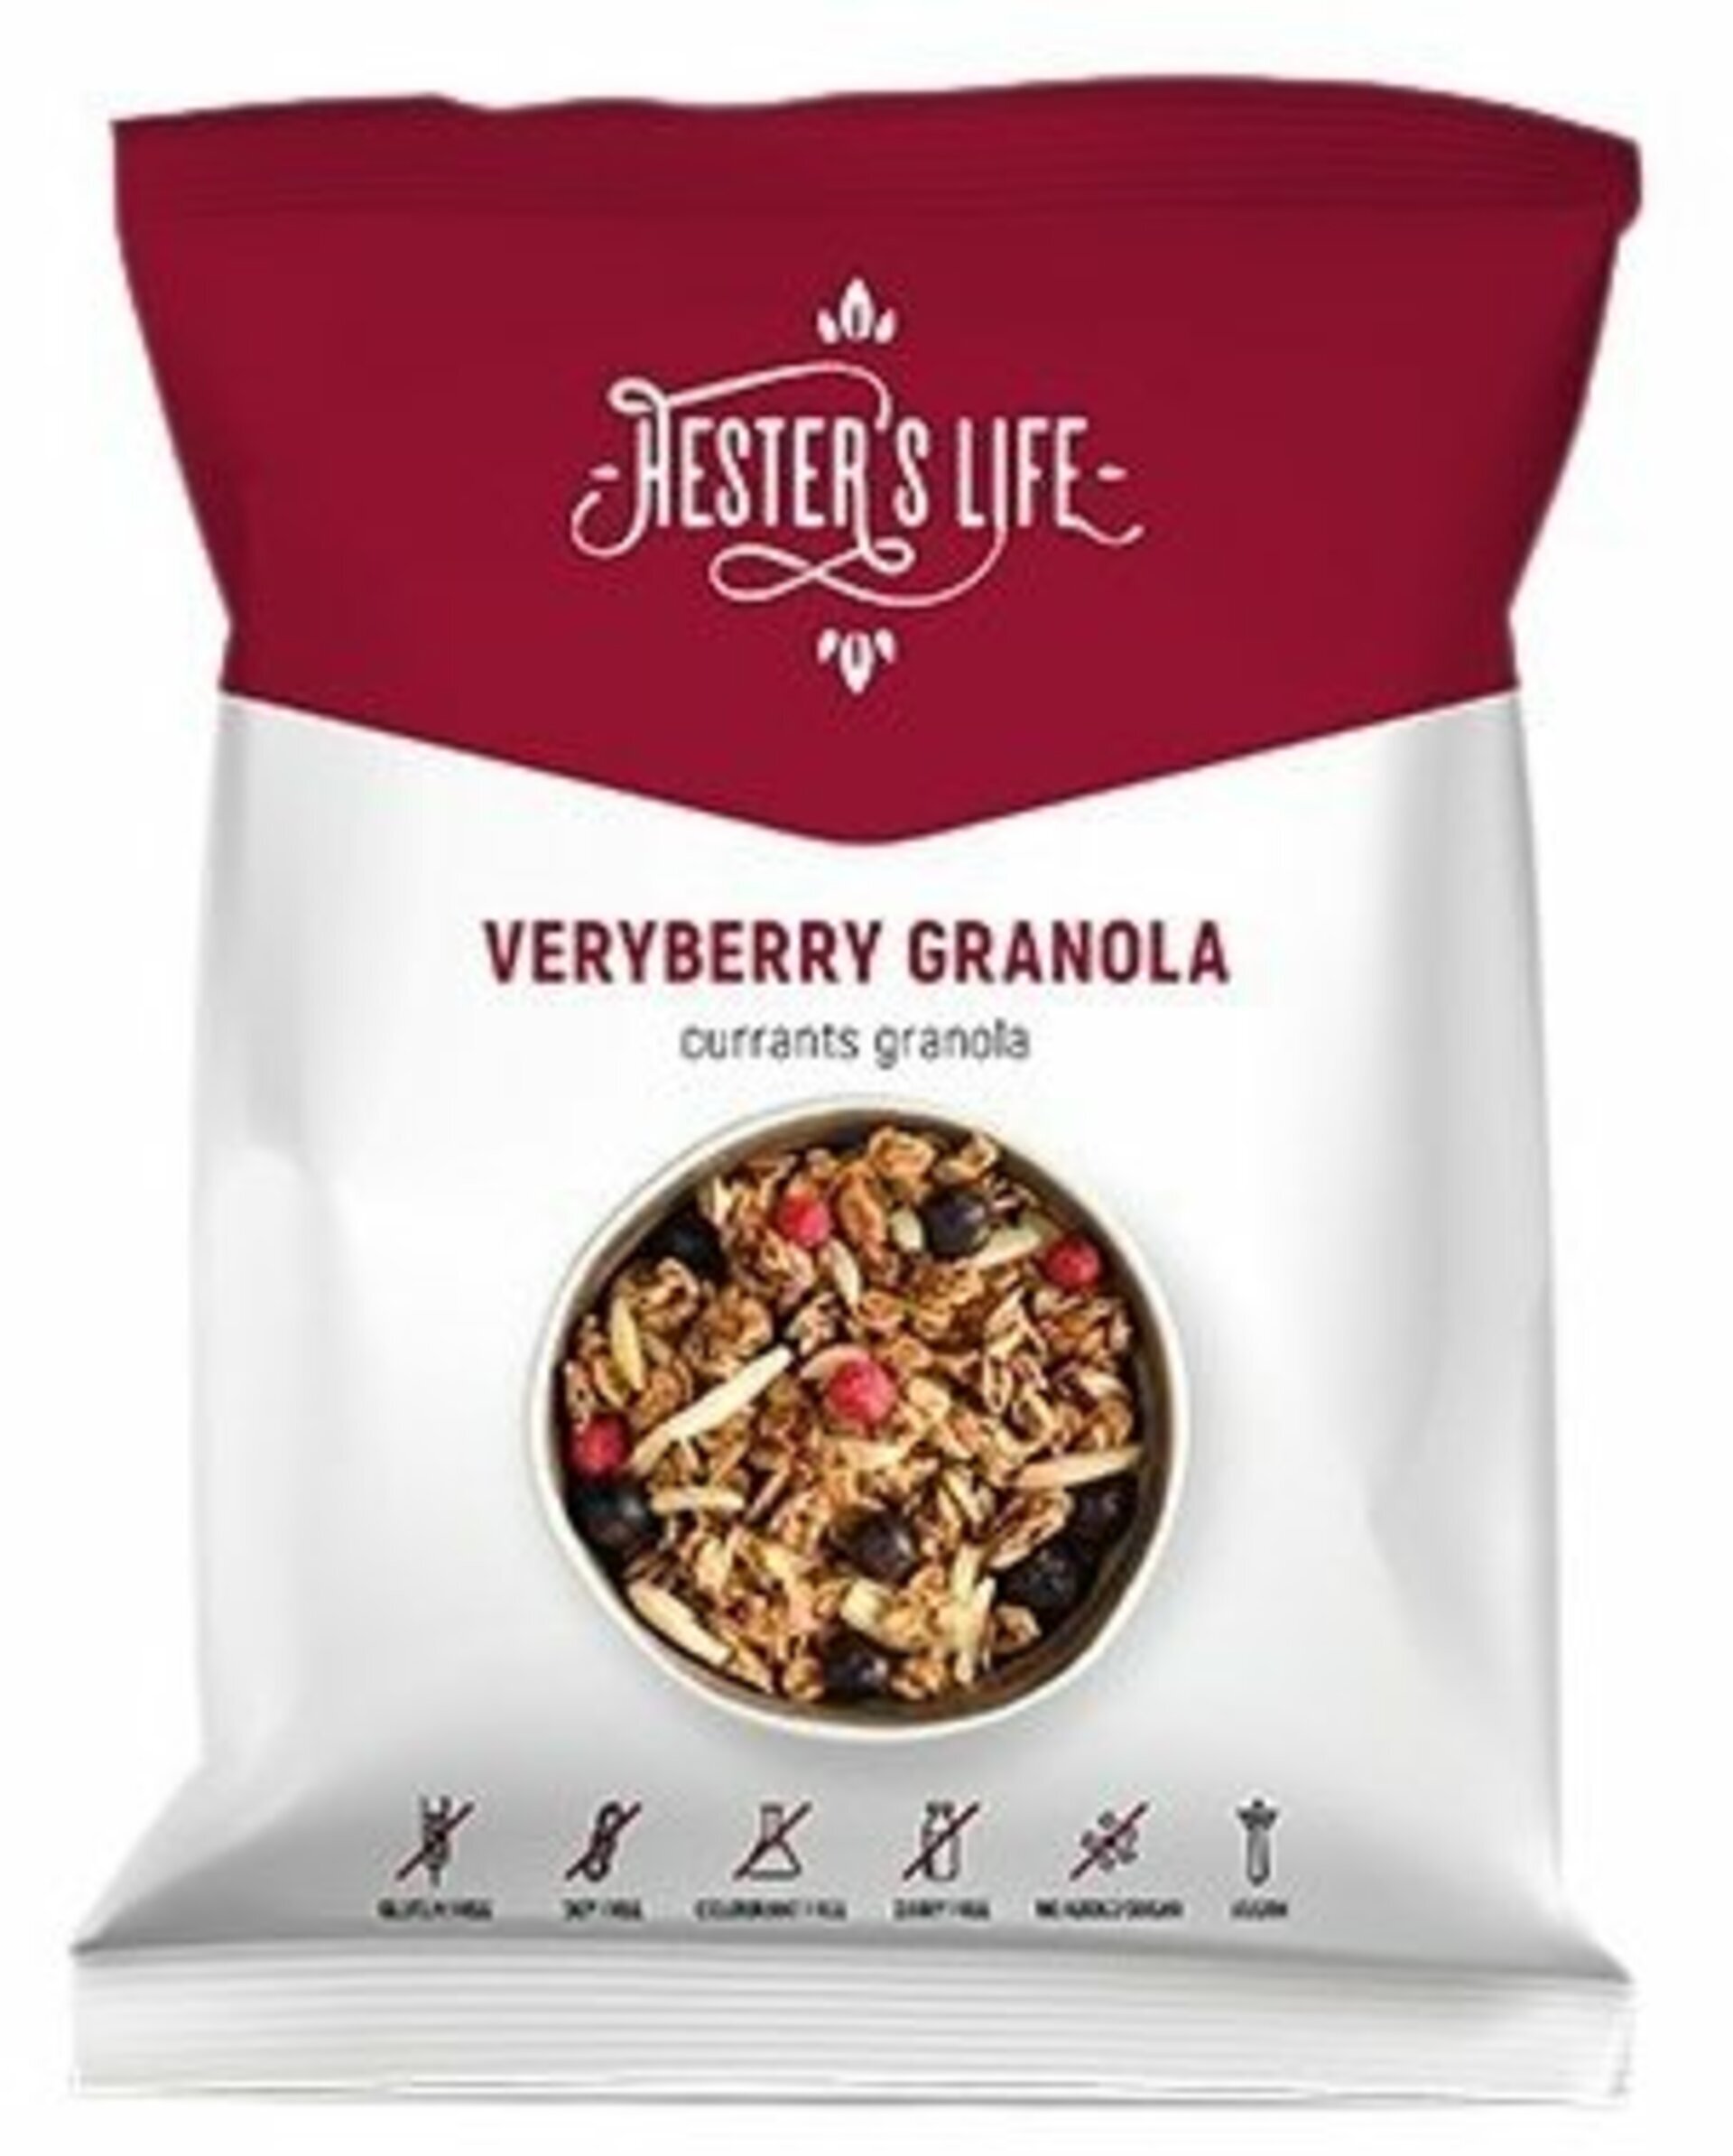 Hesters life Extra Veryberry granola 60 g expirace